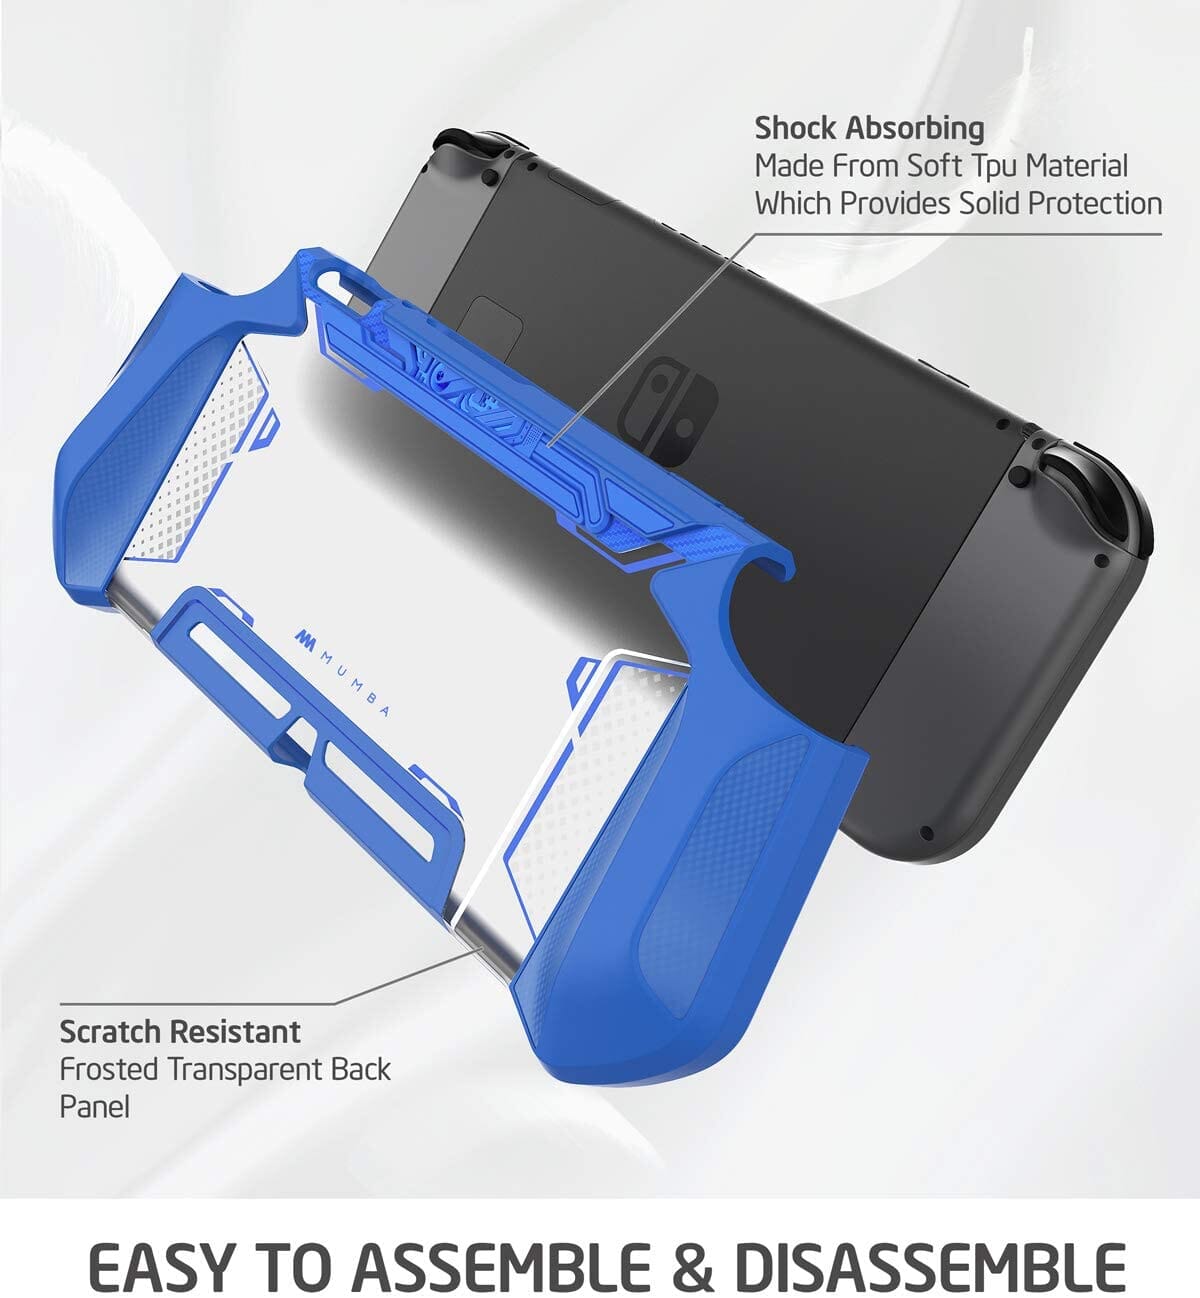 Mumba Blade Series Dockable Protective Grip Case for Nintendo Switch, Nintendo Switch Series Mumba 